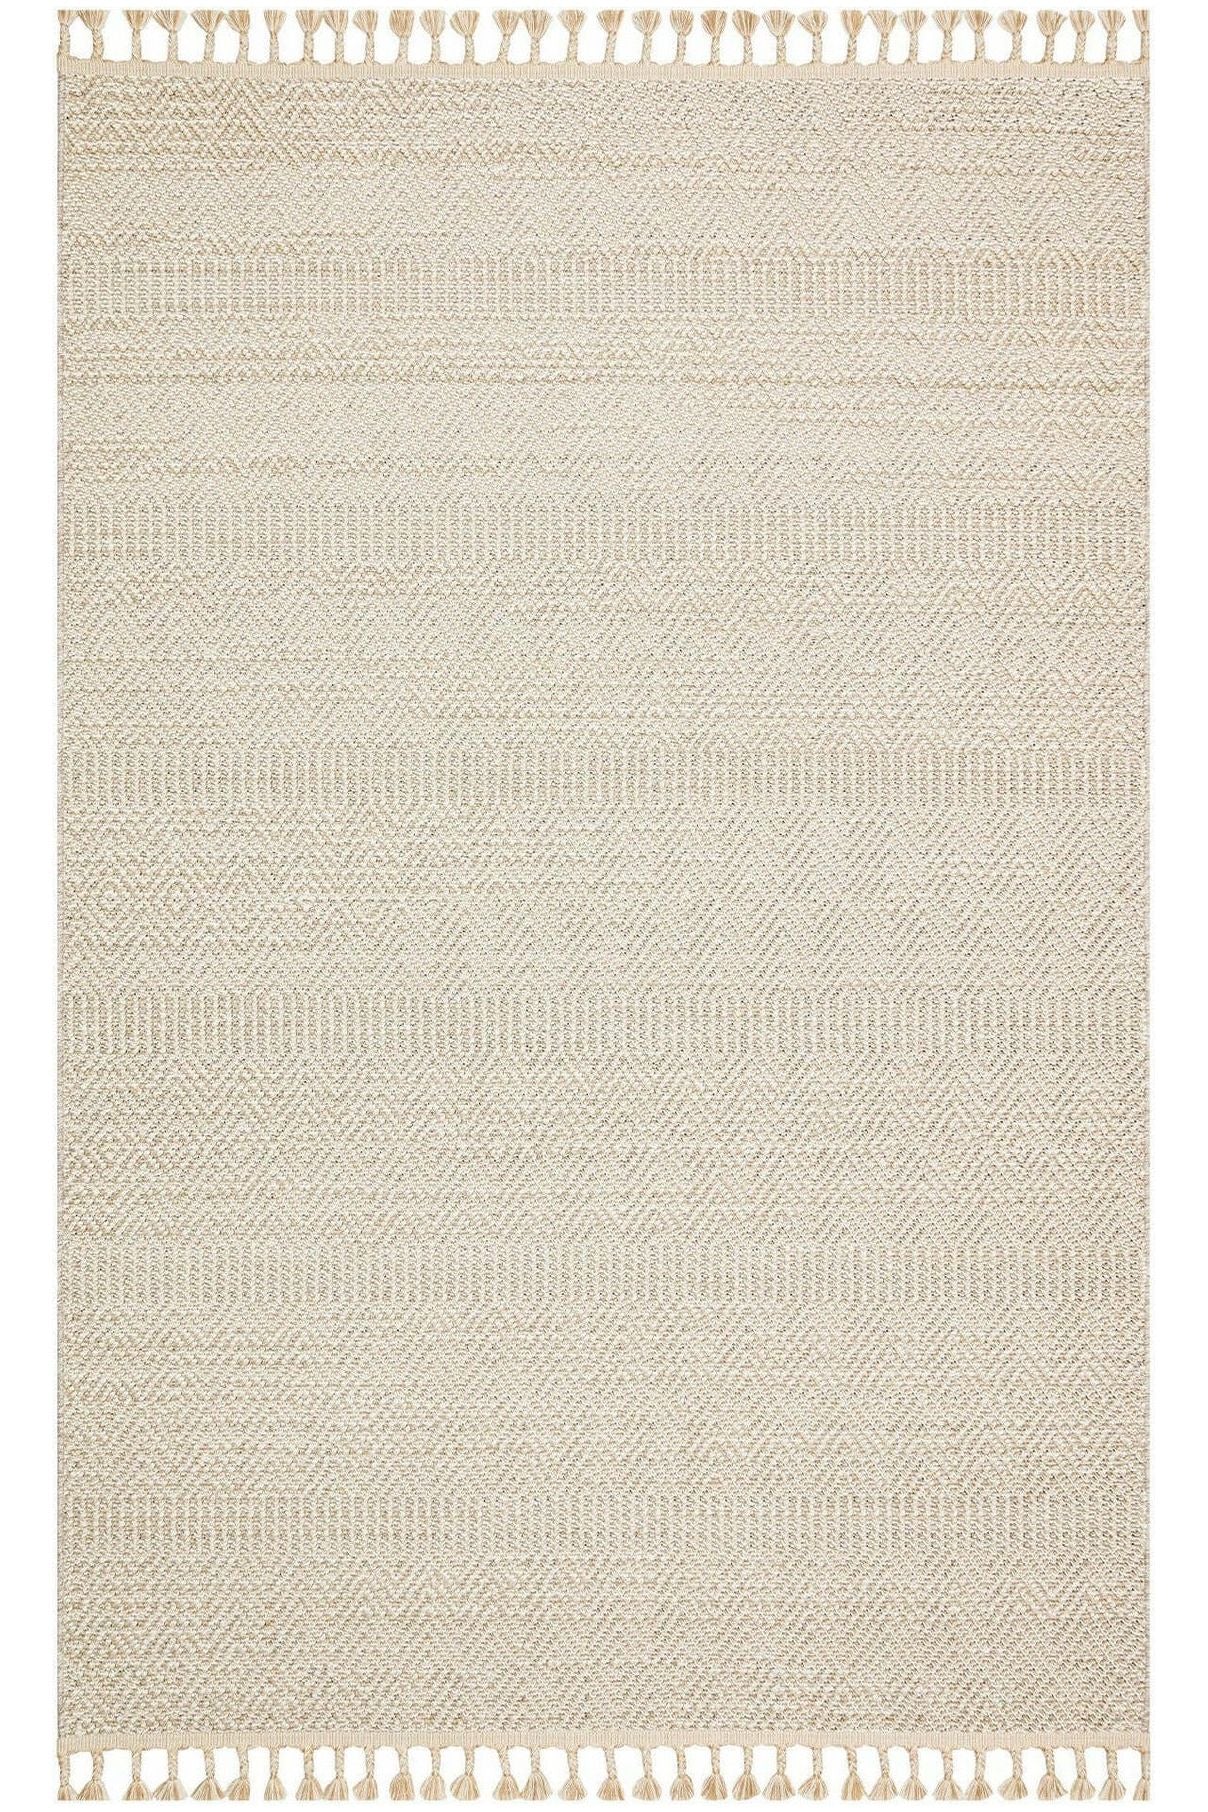 #Turkish_Carpets_Rugs# #Modern_Carpets# #Abrash_Carpets#Sh 01 Beige